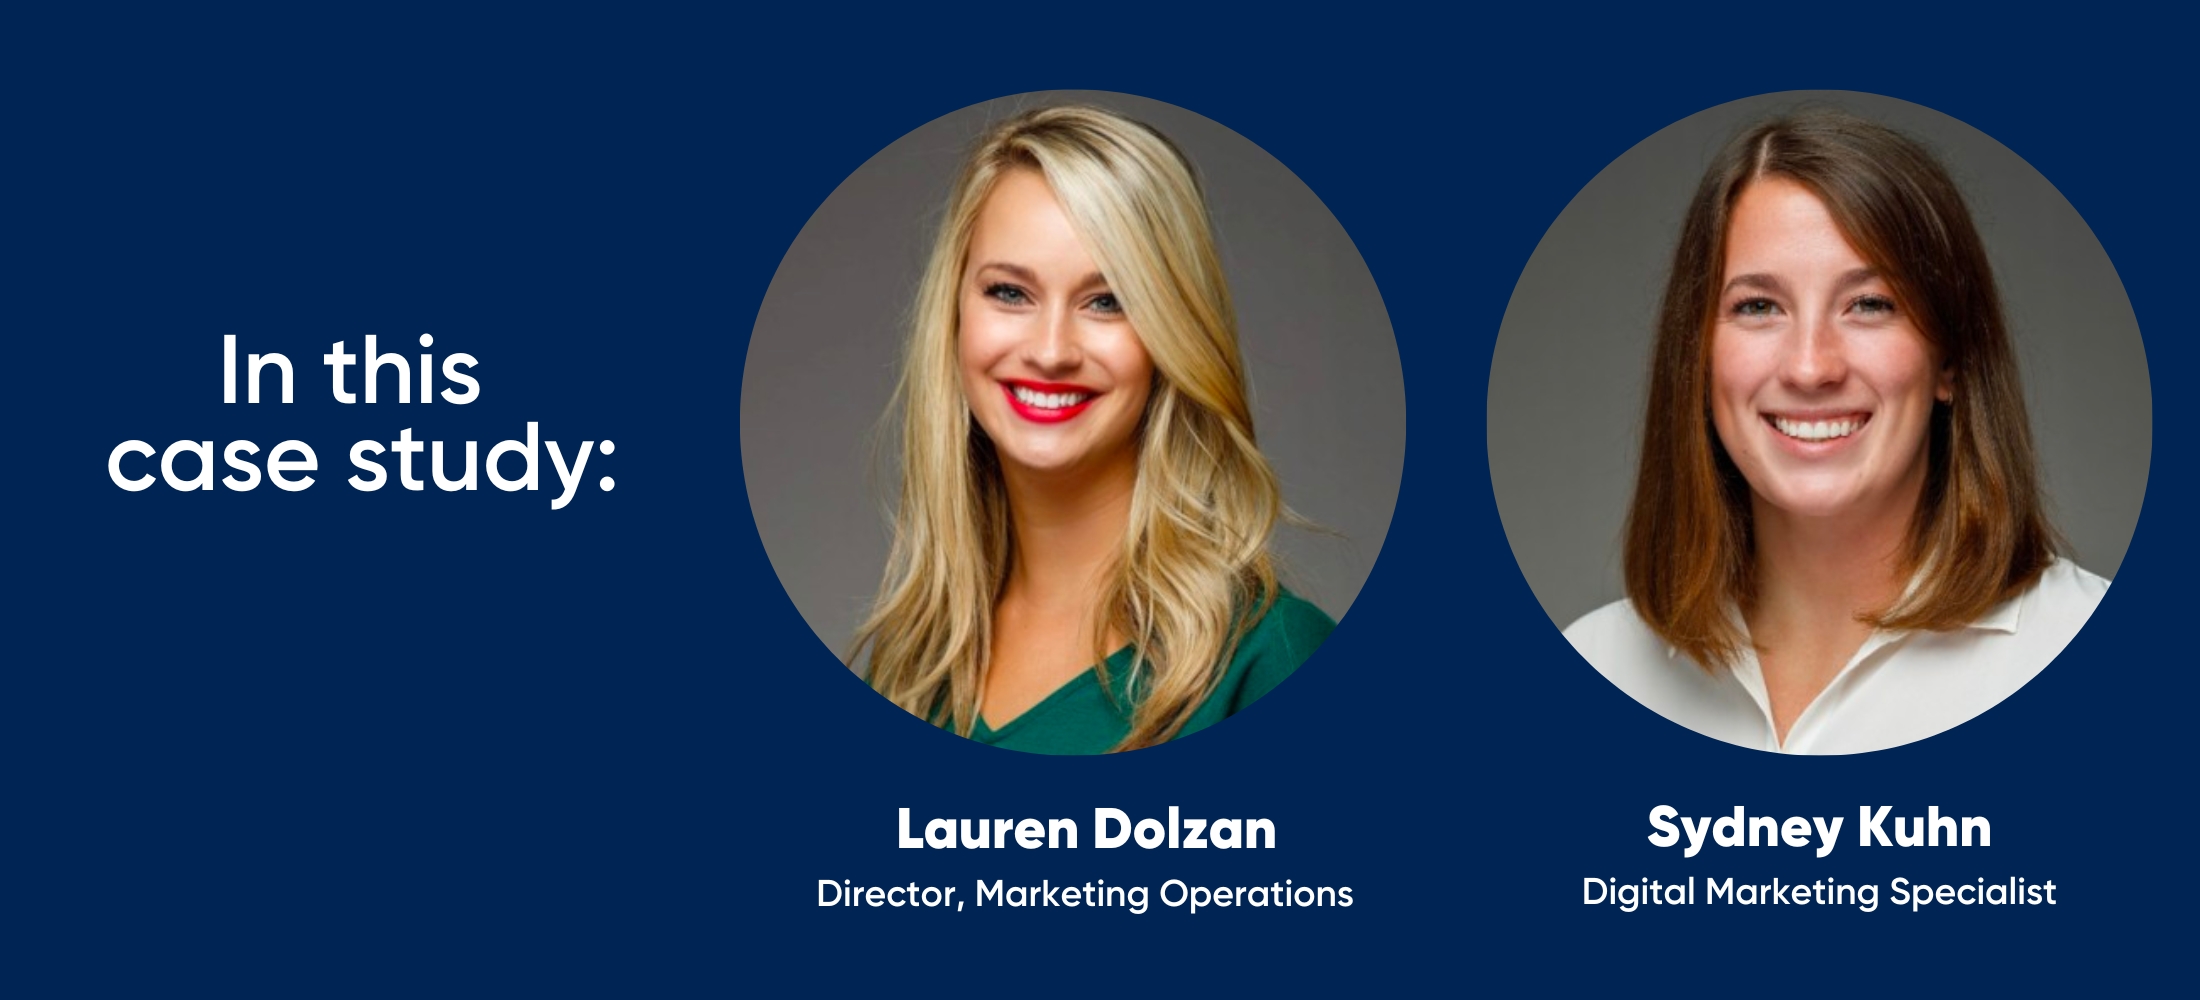 in this case study: Lauren Dolzan — Director, Marketing Operations and Sydney Kuhn, Digital Marketing Specialist